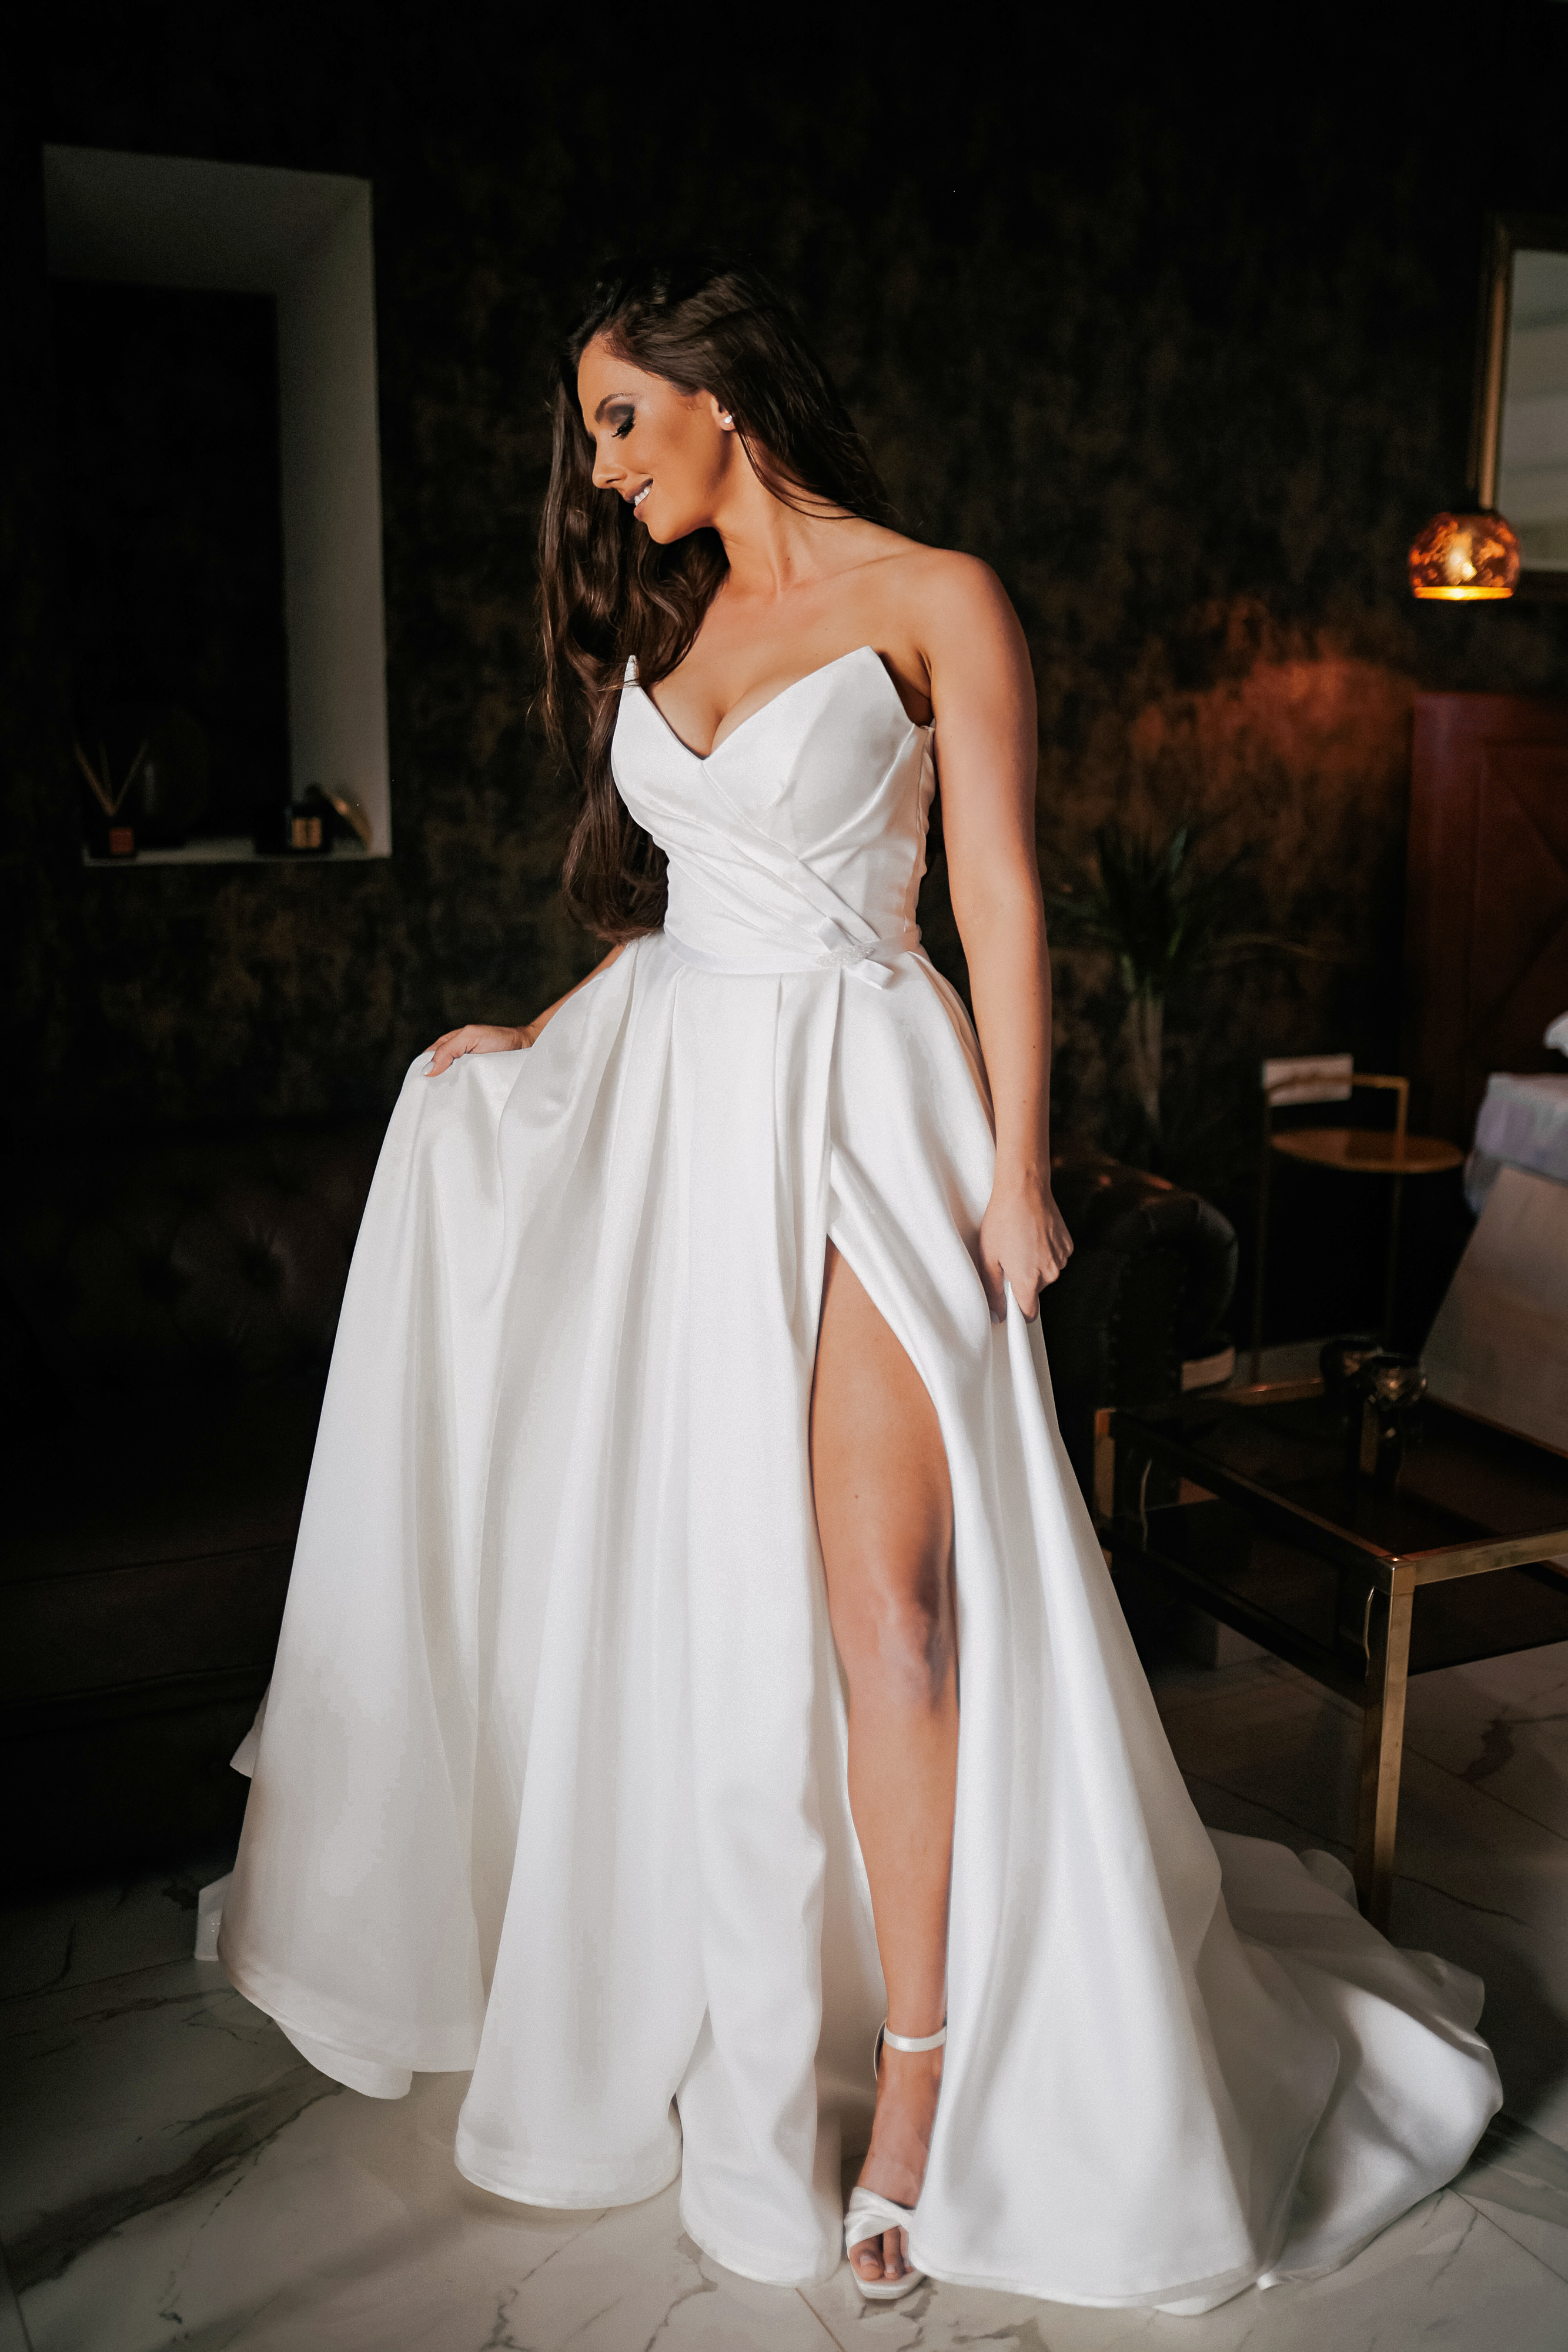 Elisha in a wedding dress